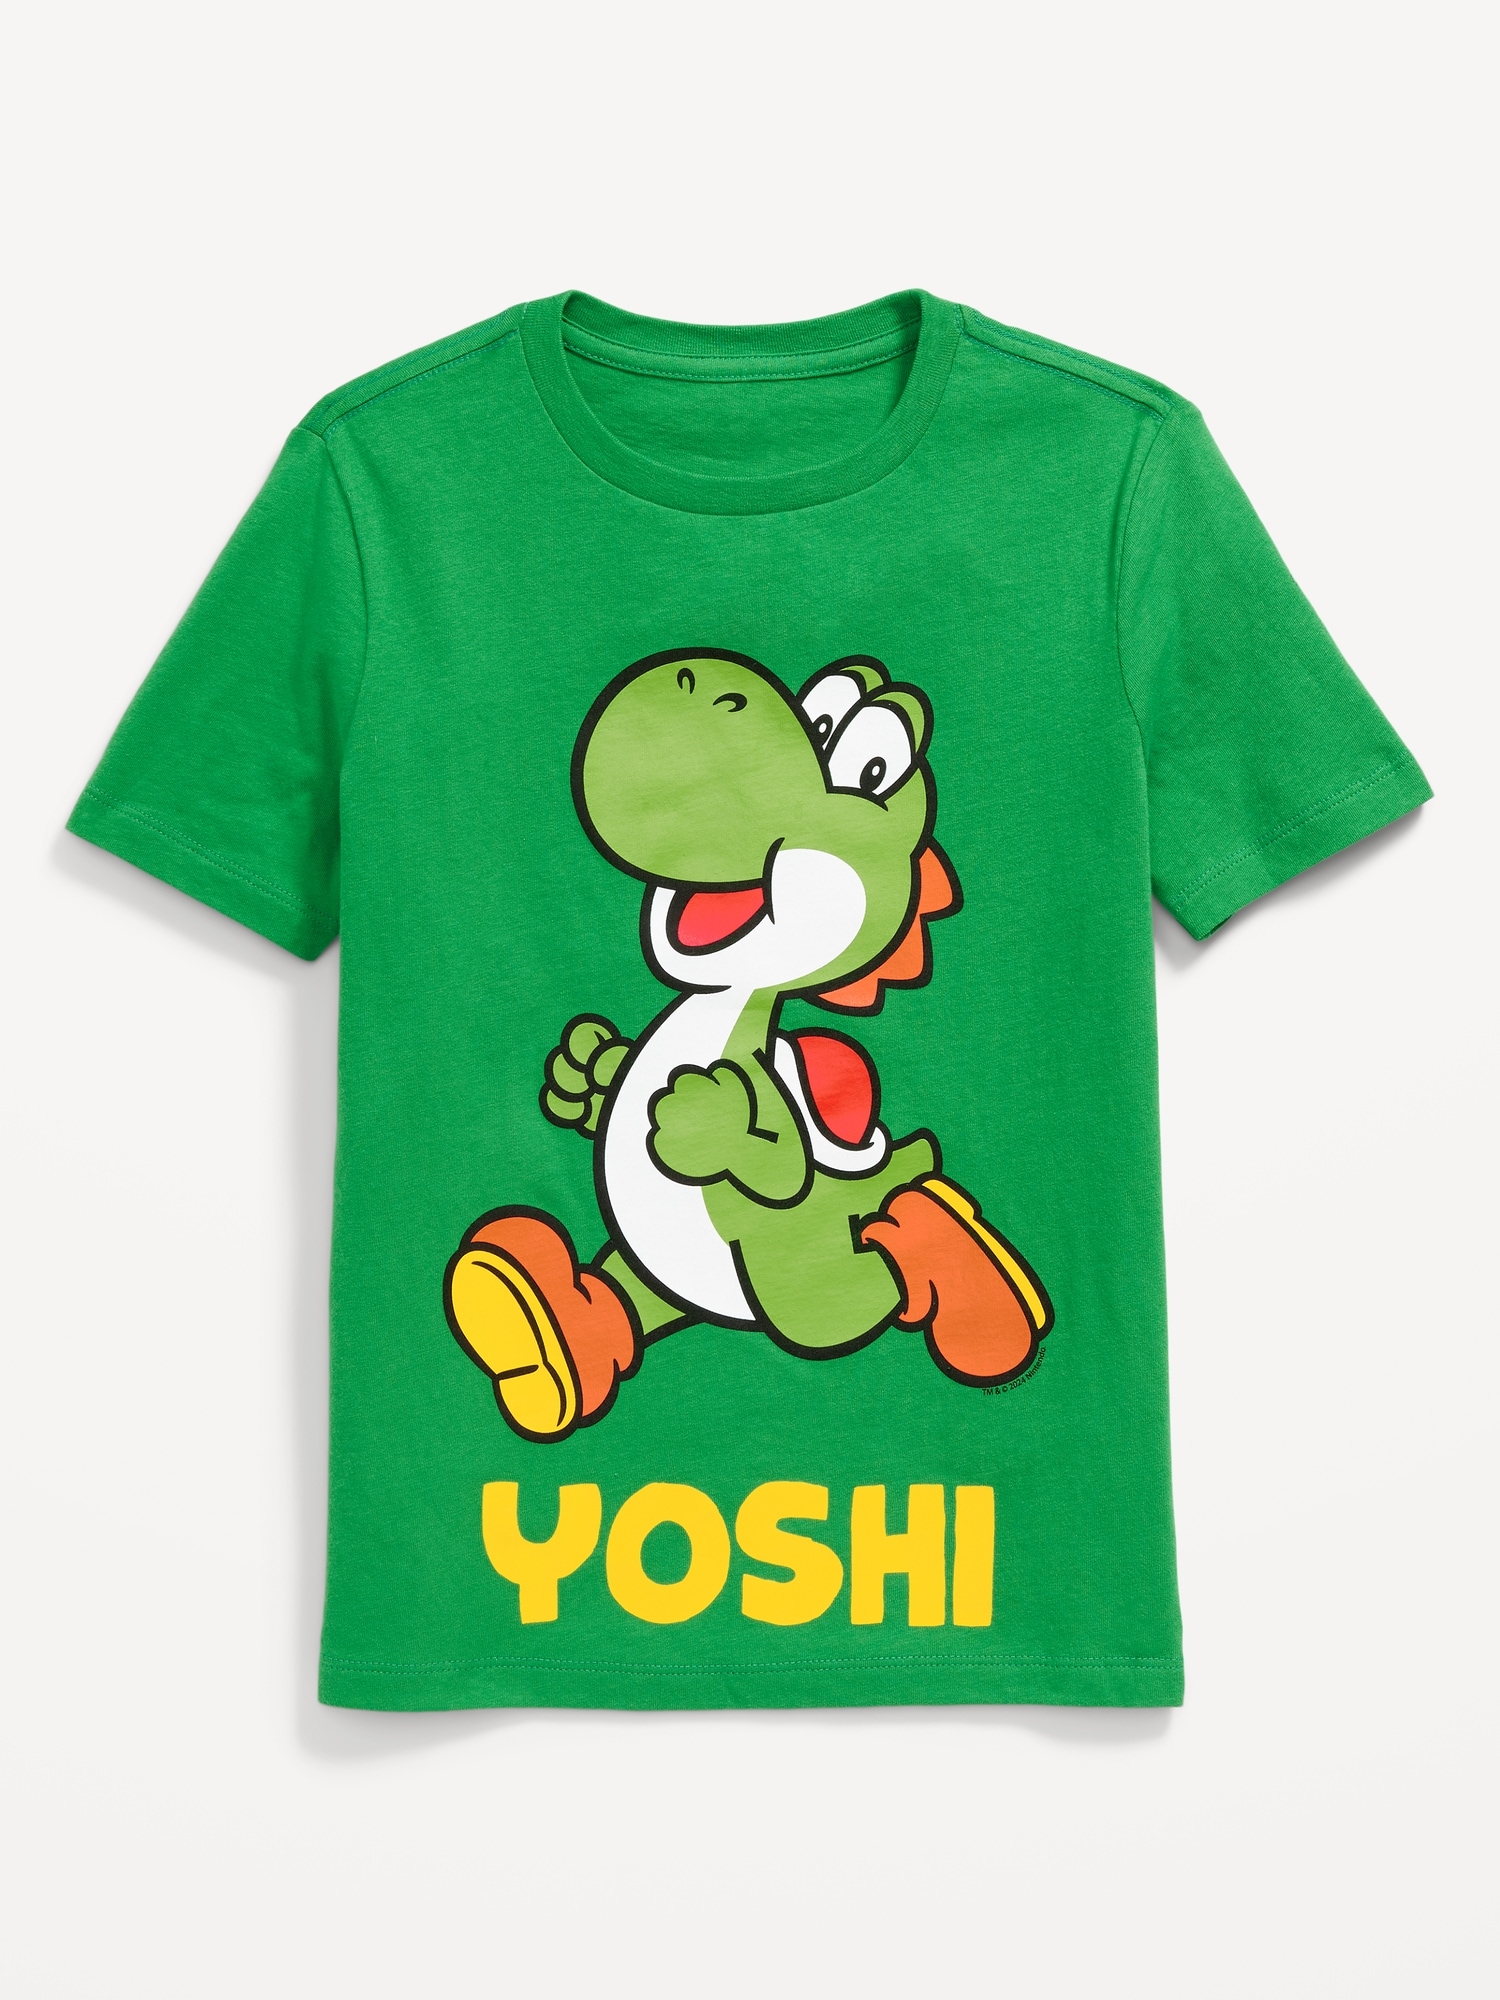 Super Mario Gender-Neutral Graphic T-Shirt for Kids